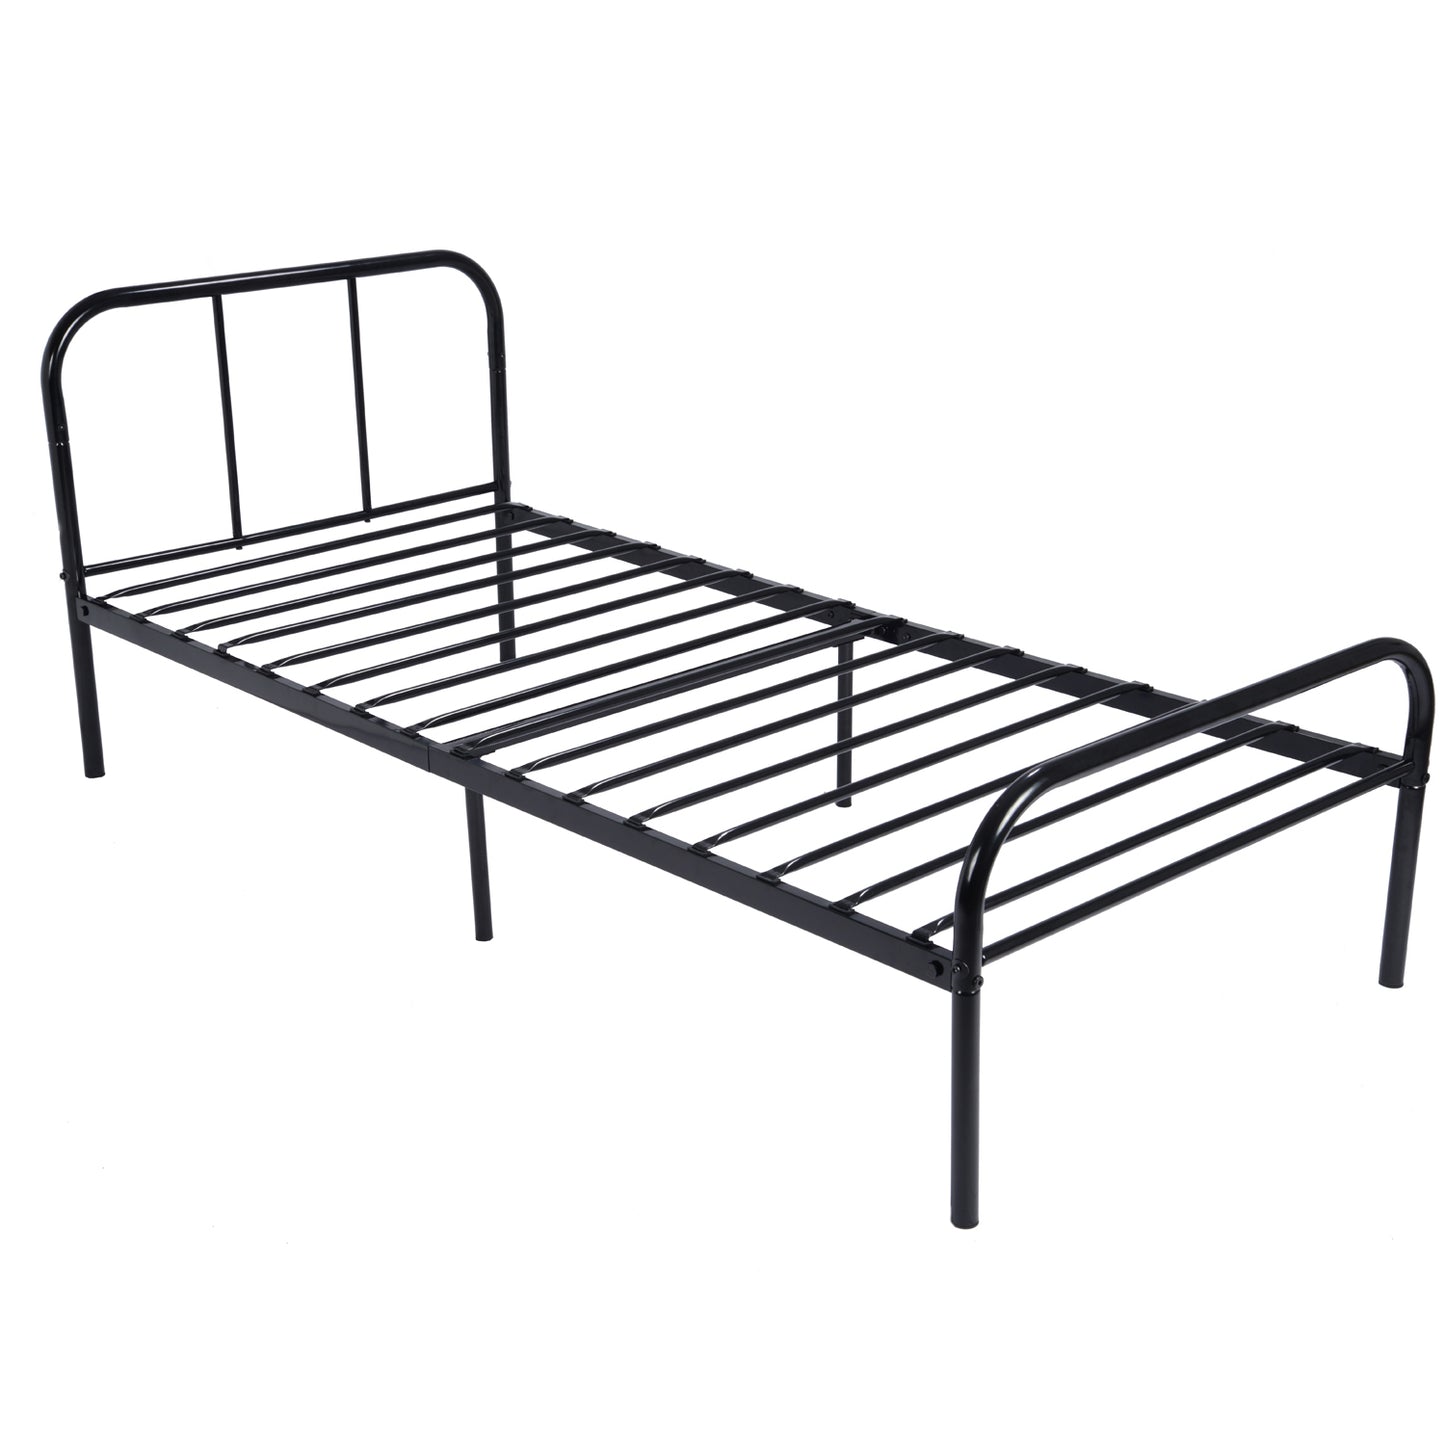 MILO Single/Double Metal Bed Frame